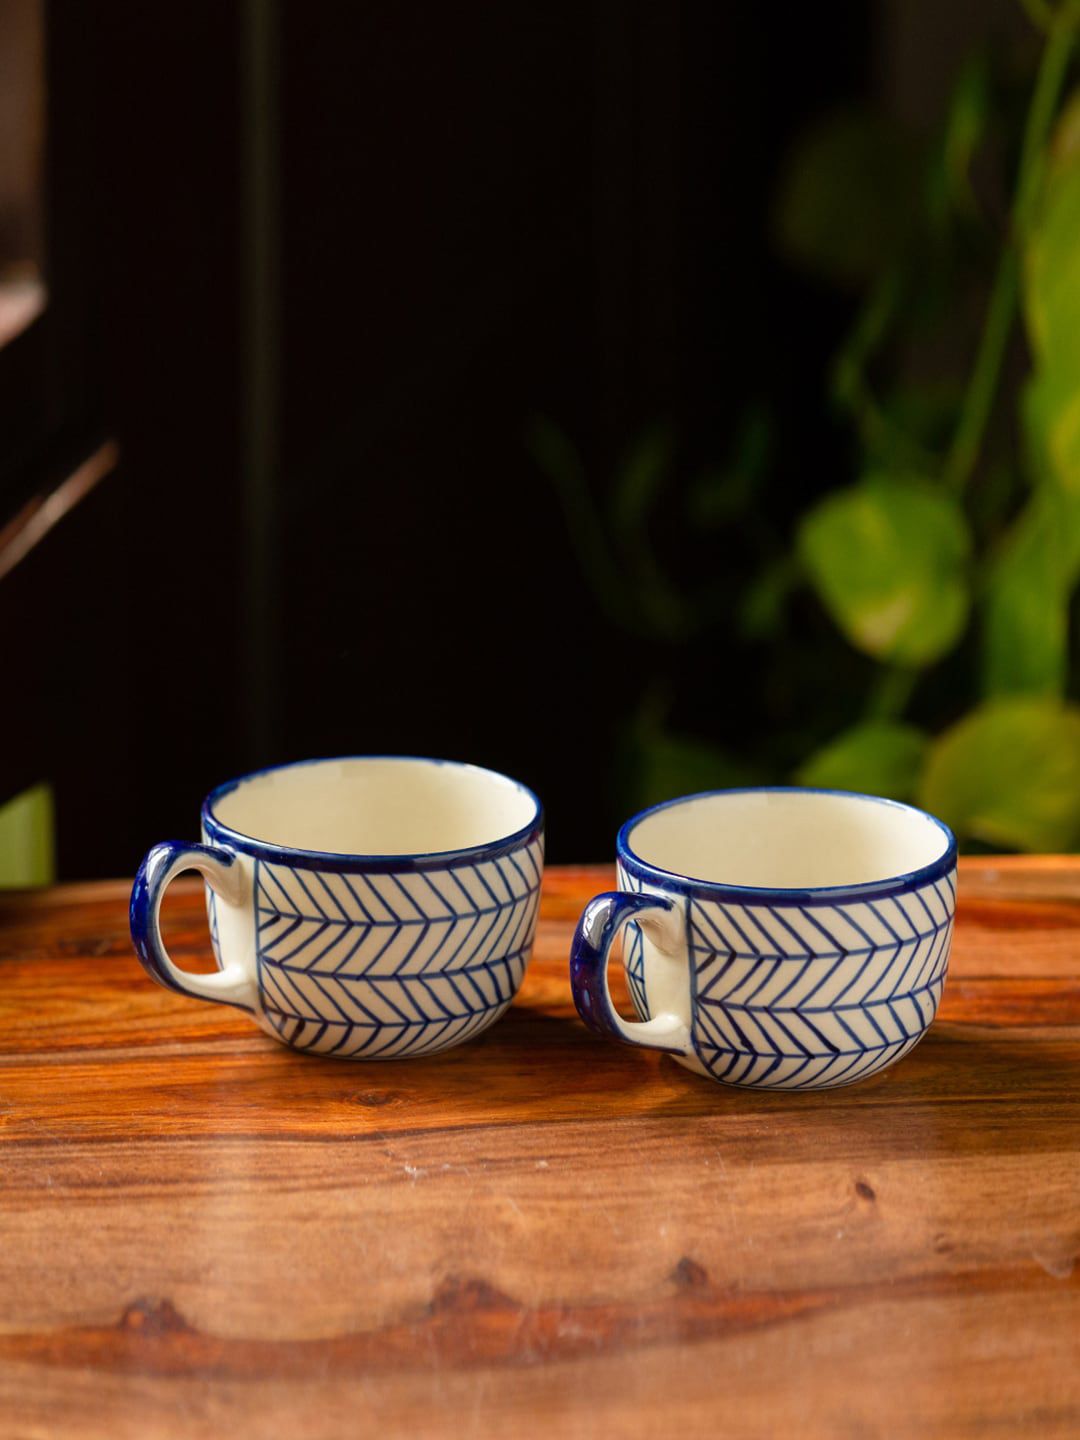 ExclusiveLane Set of 2 Blue & White Hand-Painted Ceramic Coffee & Milk Mugs Price in India